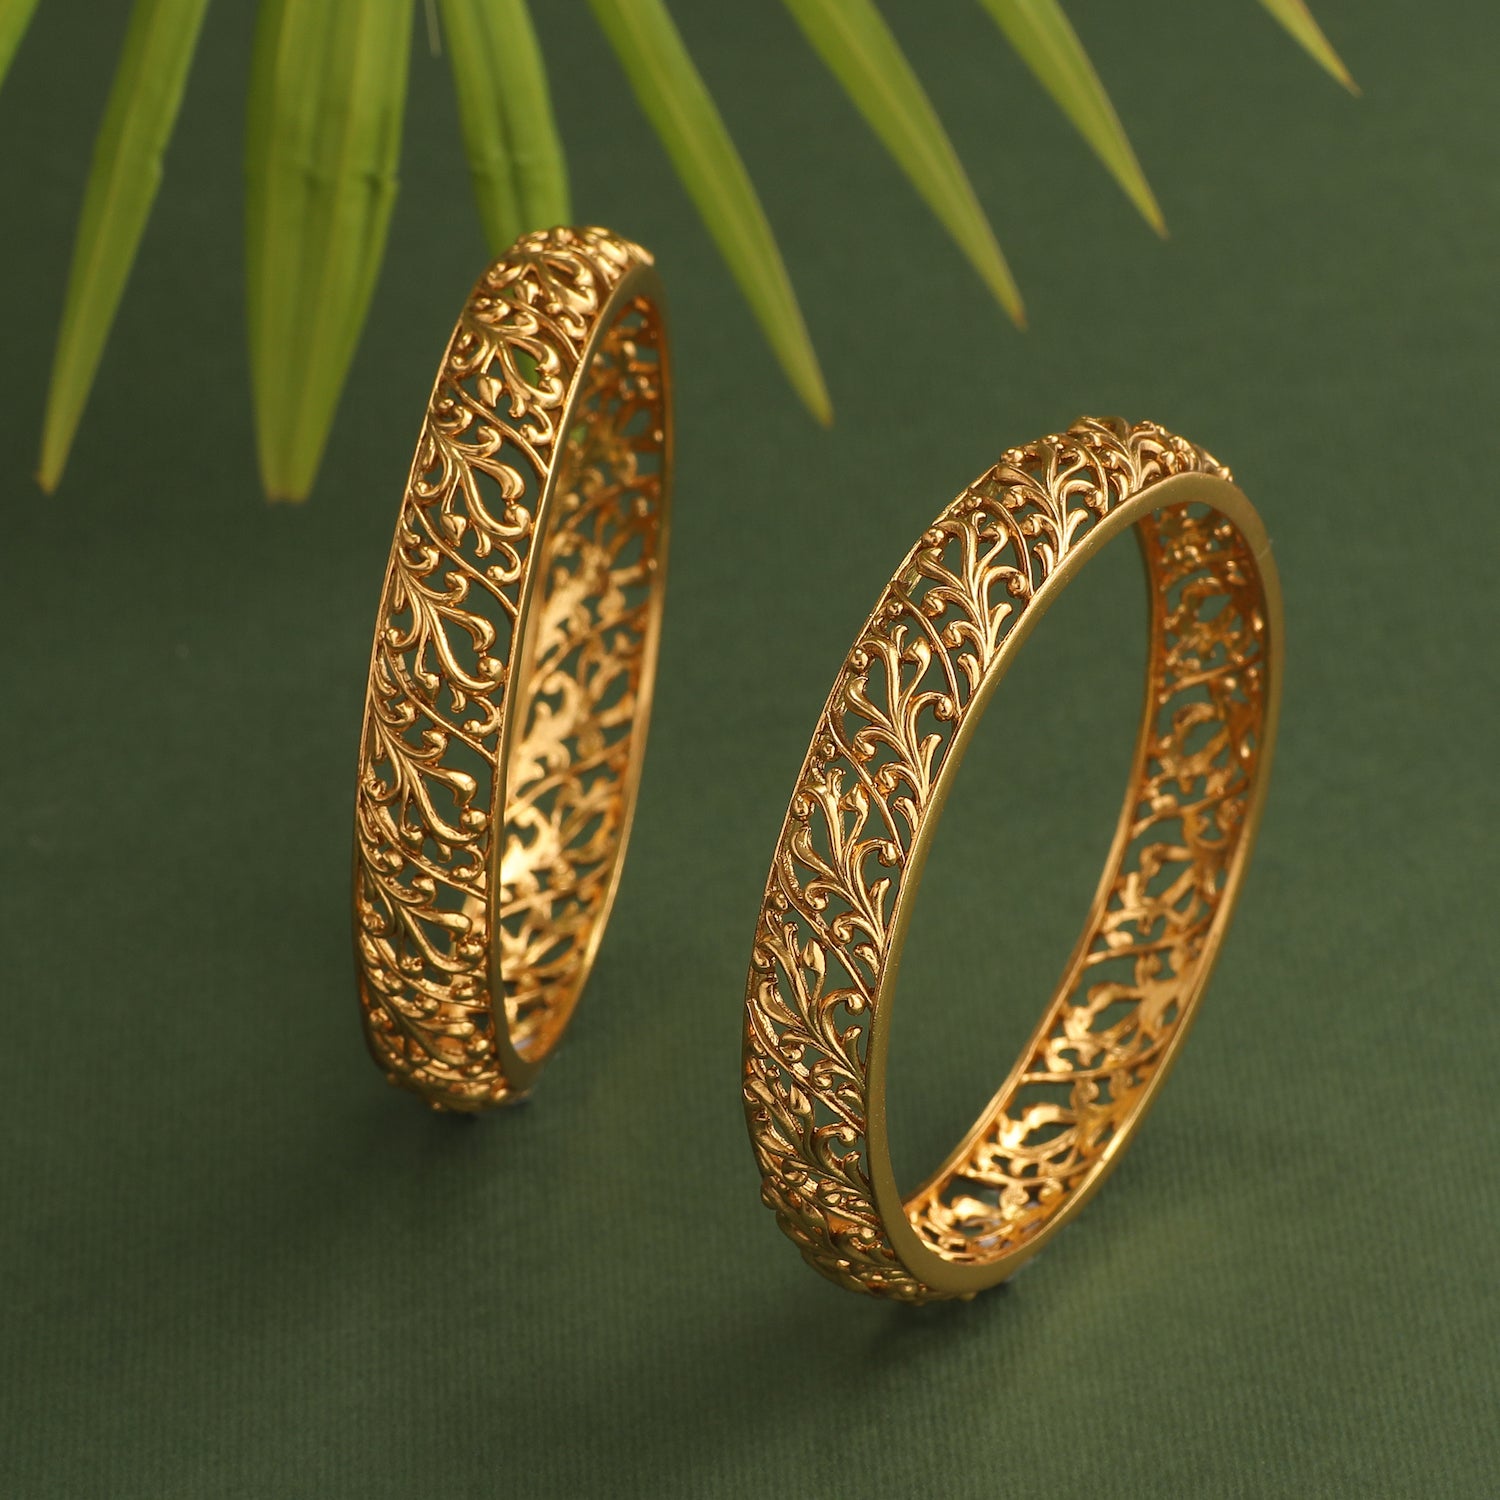 1 Gram Gold Plated Exquisite Design High-Quality Bracelet For Men - Style  C581, गोल्ड प्लेटेड ब्रेसलेट - Soni Fashion, Rajkot | ID: 2852804648297